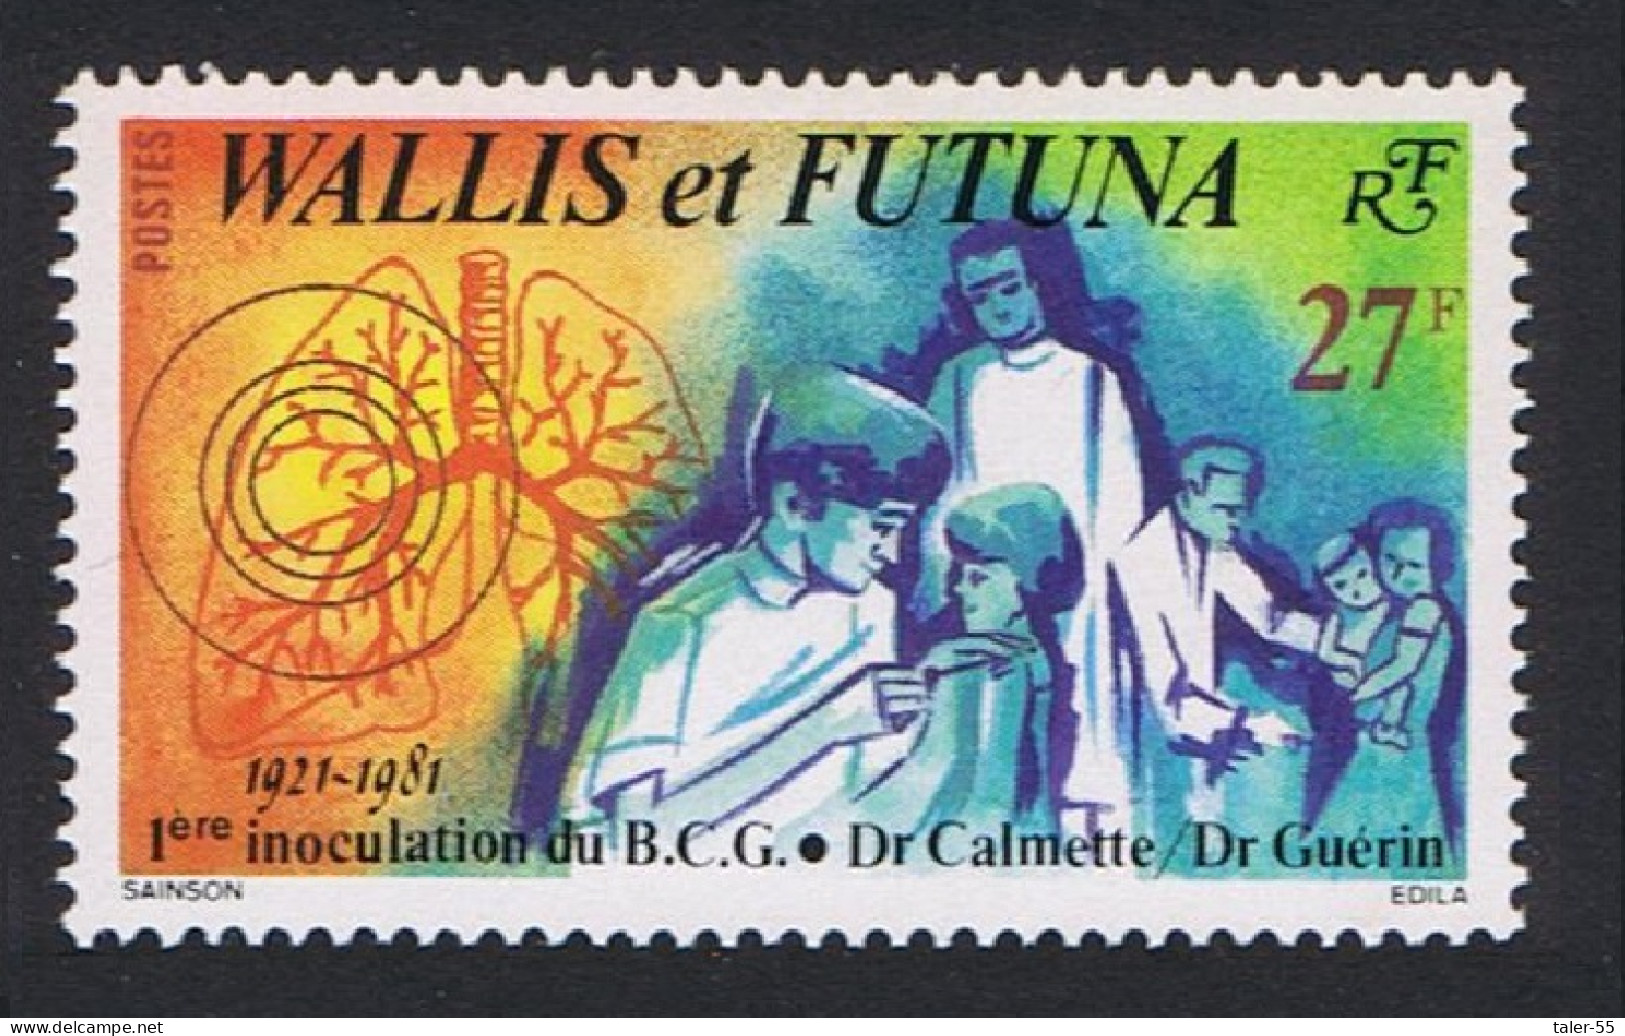 Wallis And Futuna BCG Anti Tuberculosis Inoculation 1981 MNH SG#376 Sc#270 - Unused Stamps